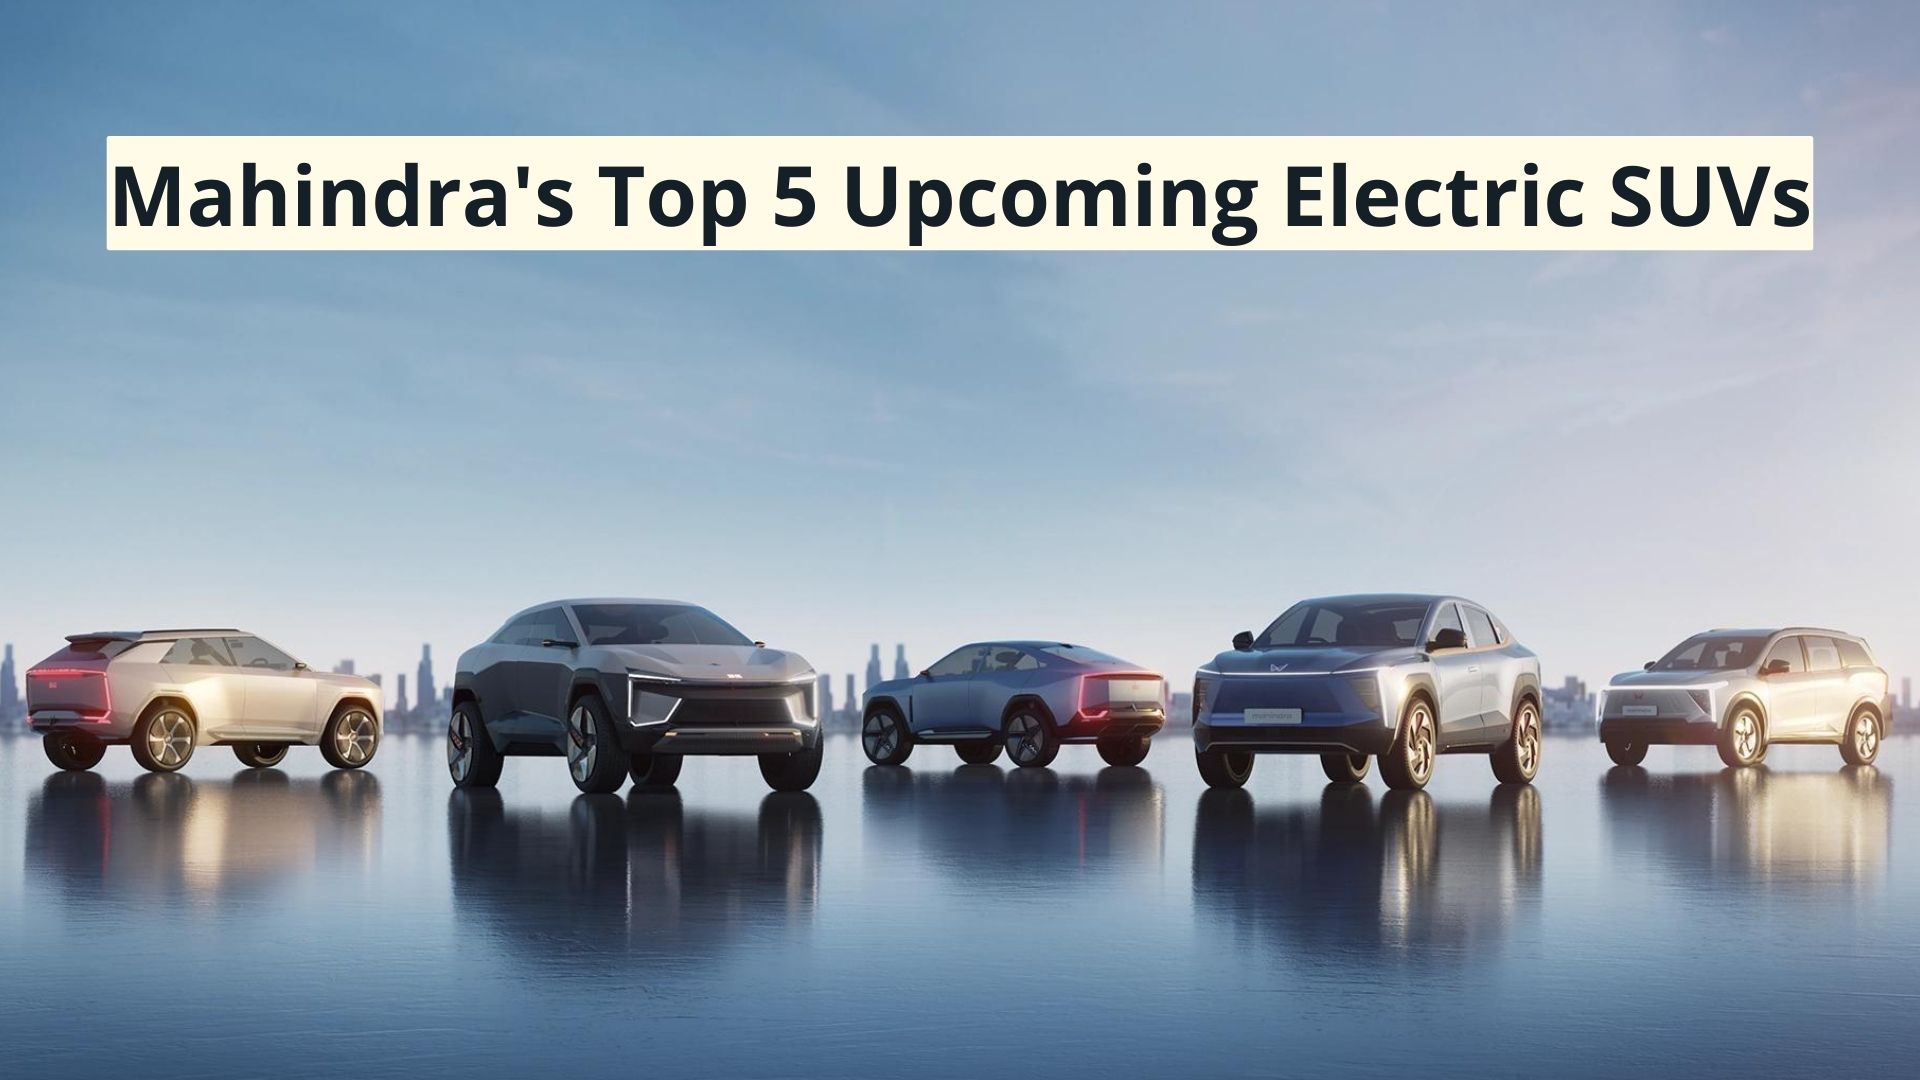 https://e-vehicleinfo.com/mahindra-top-5-upcoming-electric-suv/